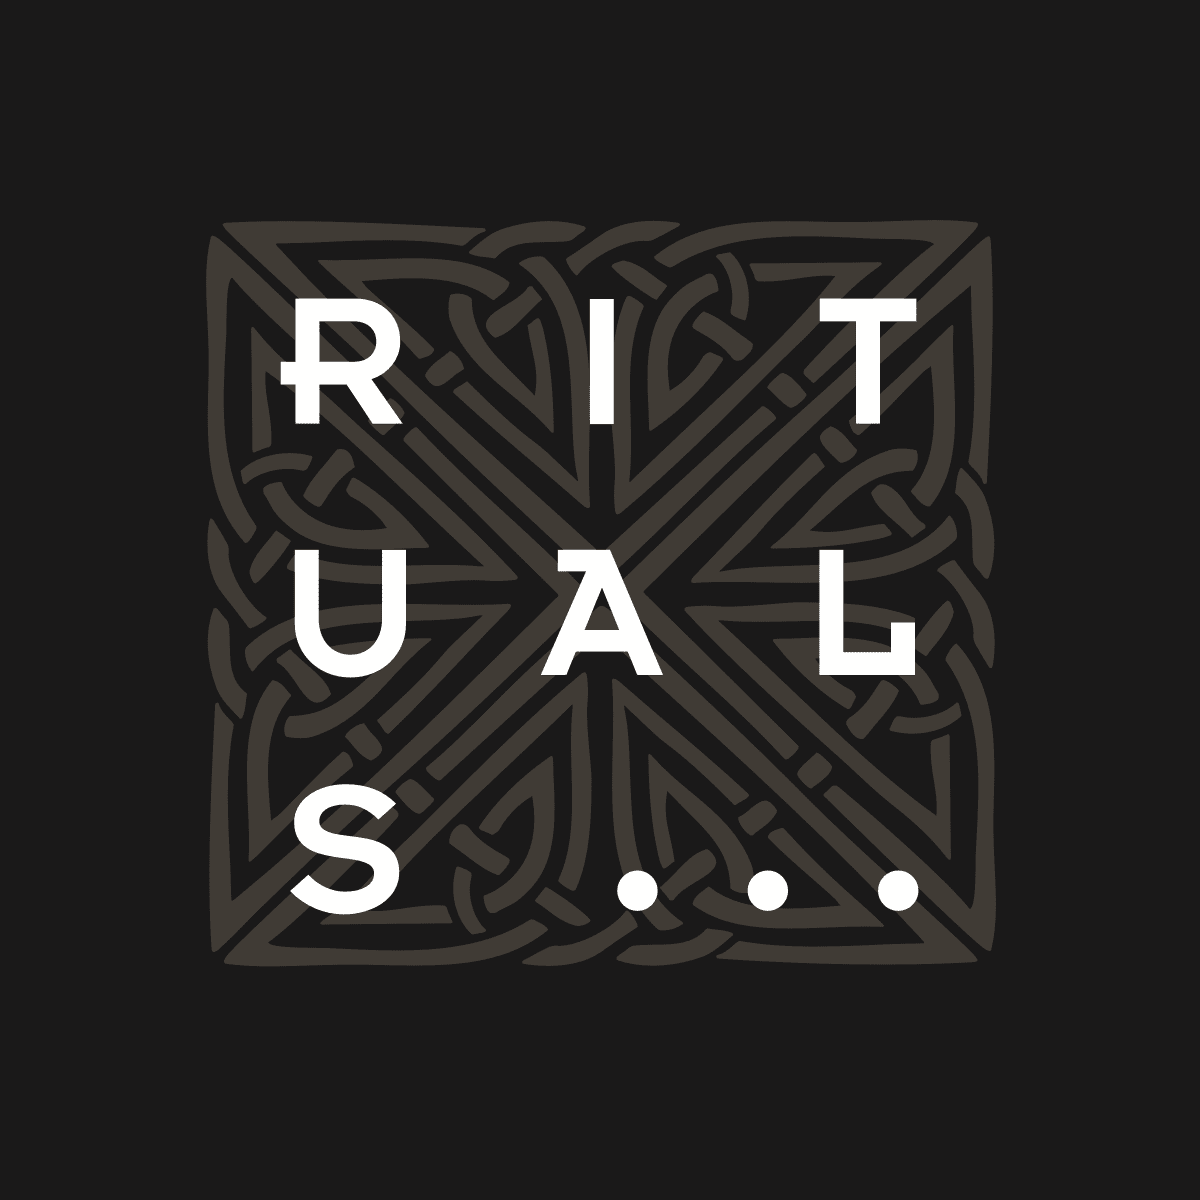 ريتوالز | Rituals